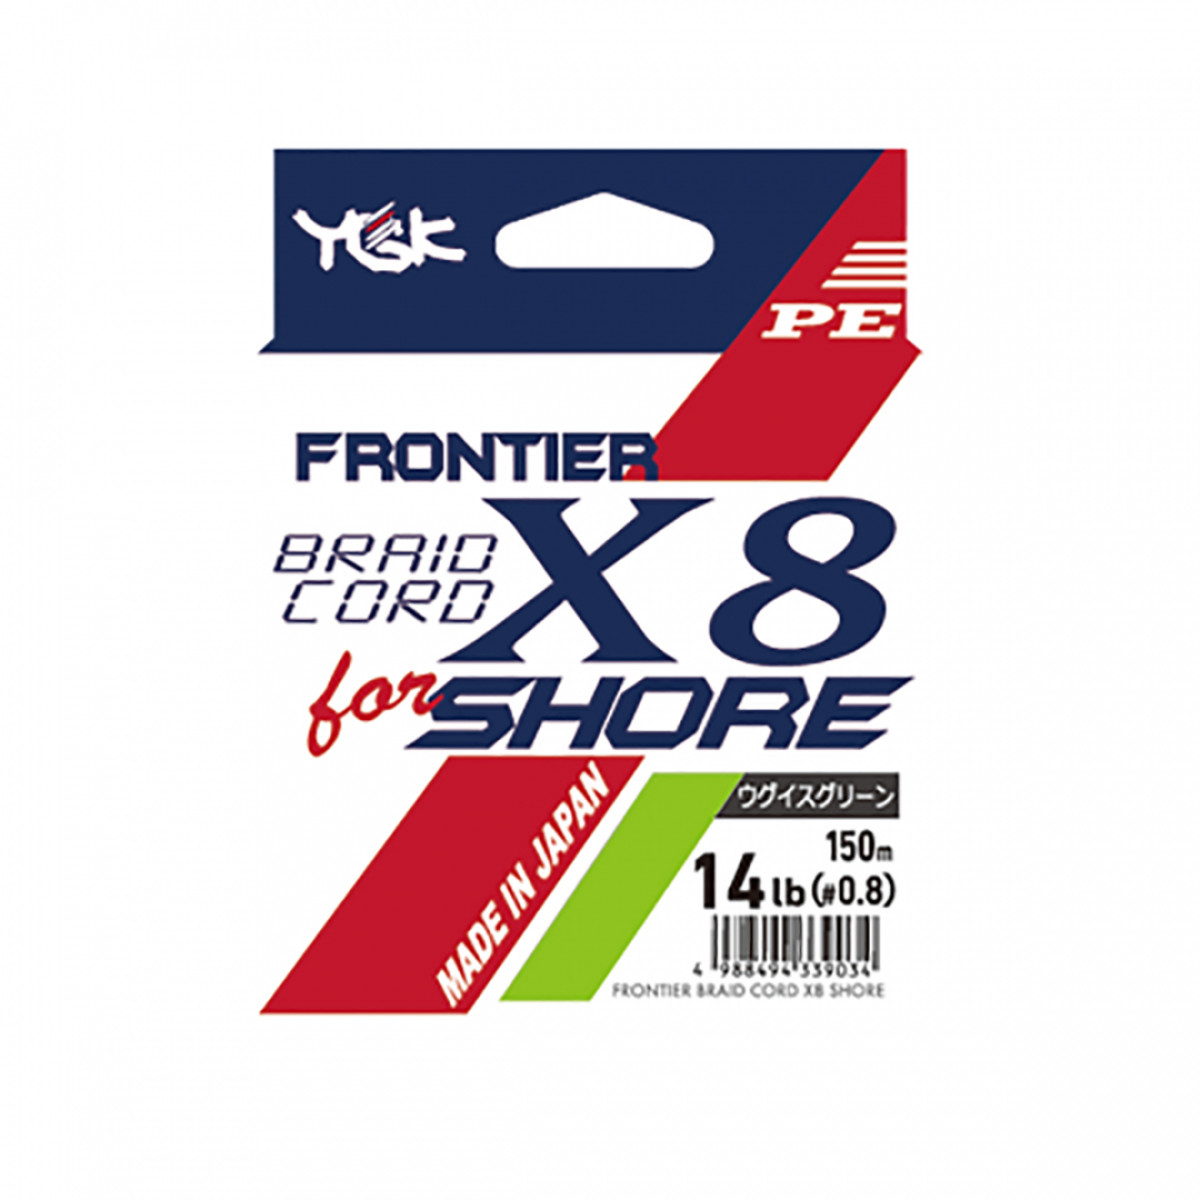 Frontier Braid Cord X8 